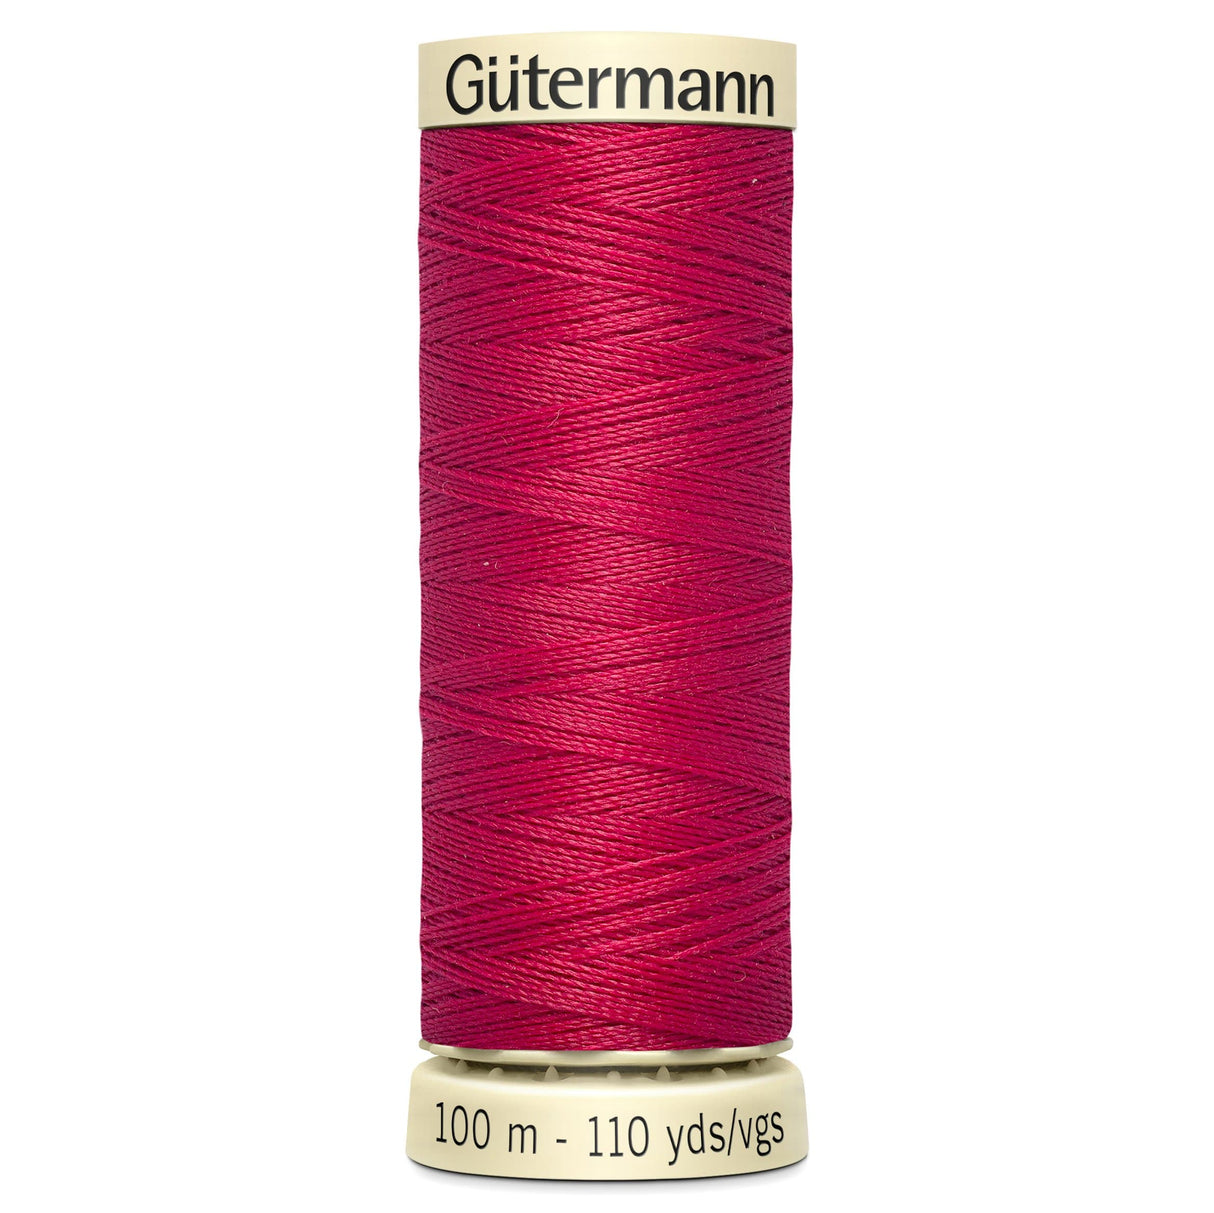 Groves Haberdashery 909 Gutermann Thread Sewing Cotton 100 m Black to Pink